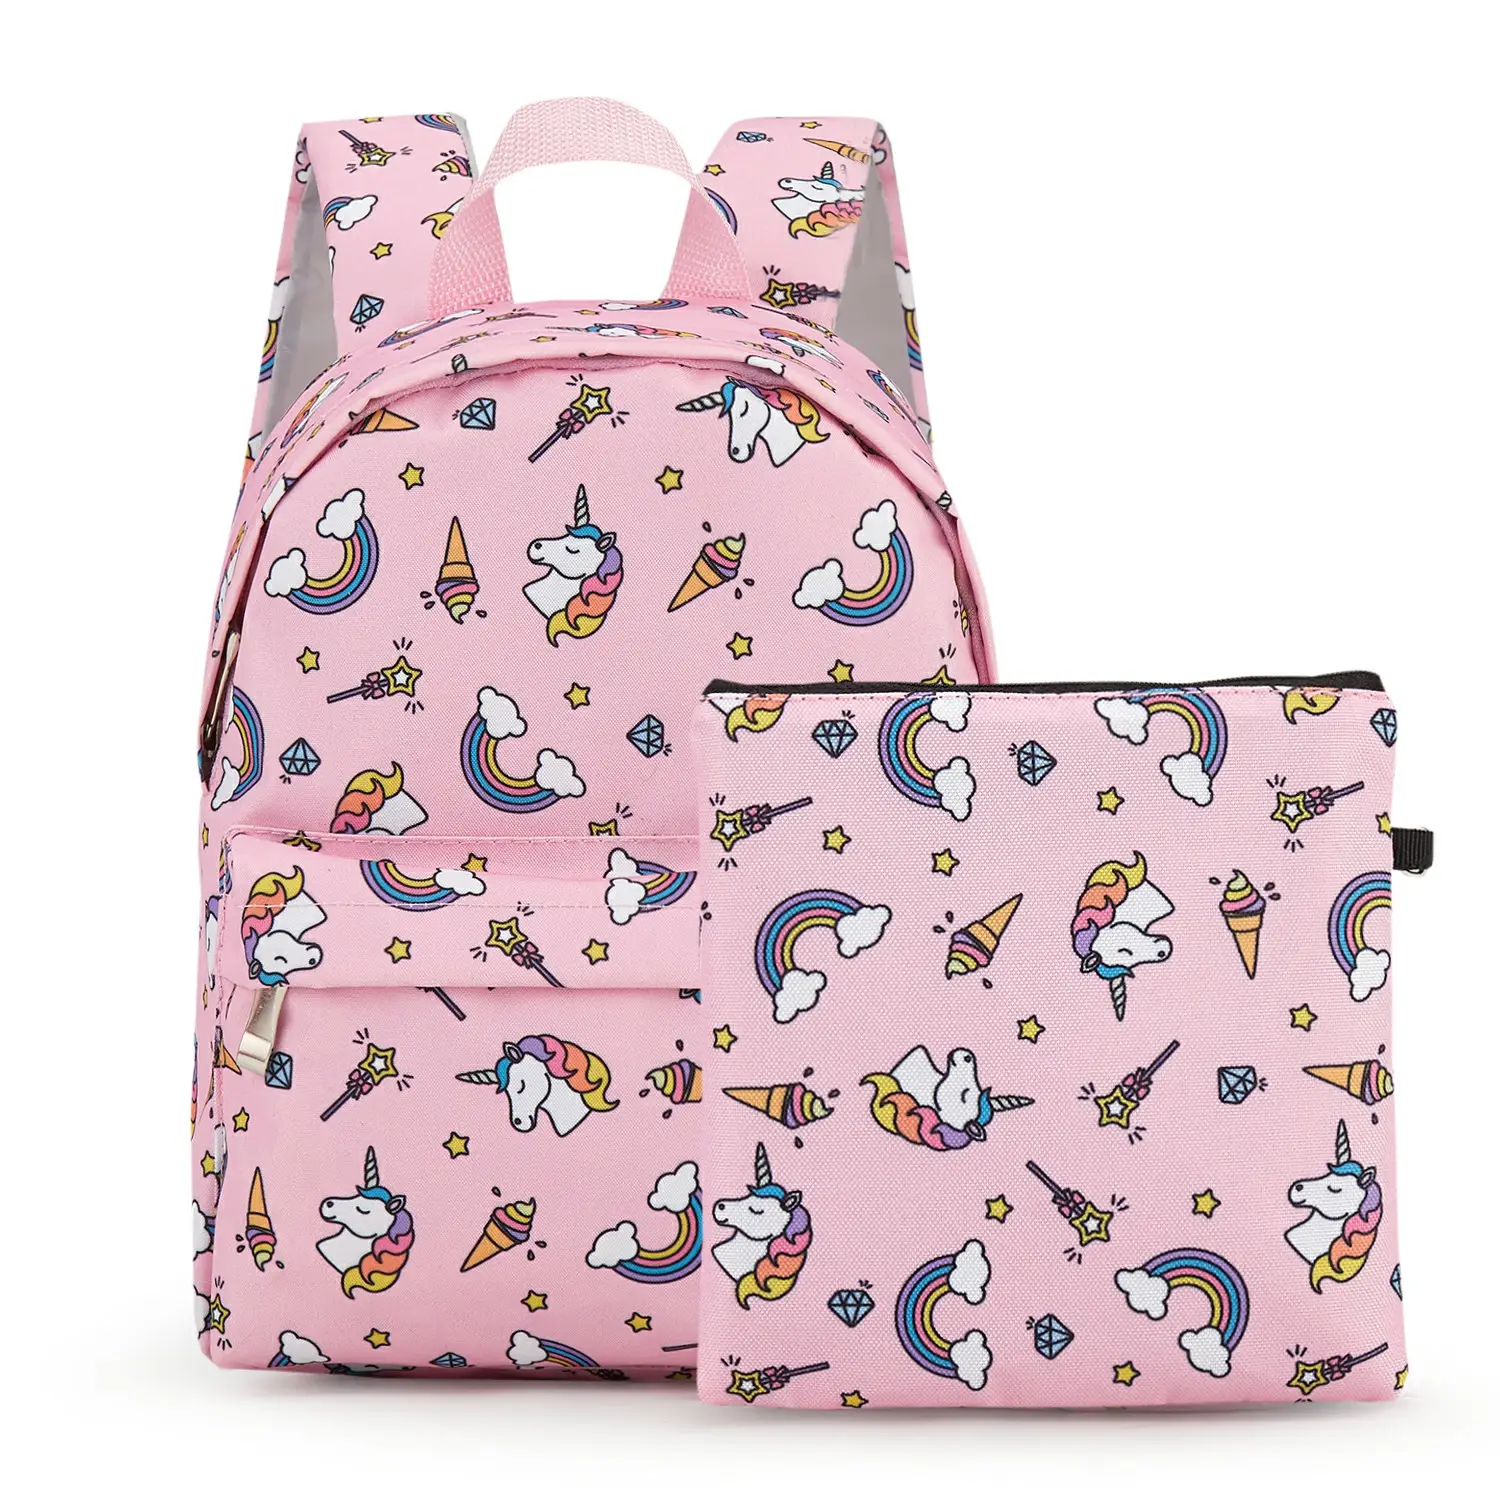 Cute waterproof kids dinosaur backpack cheap toddler animal elephant uni corn rabbit mermaid bus car bags